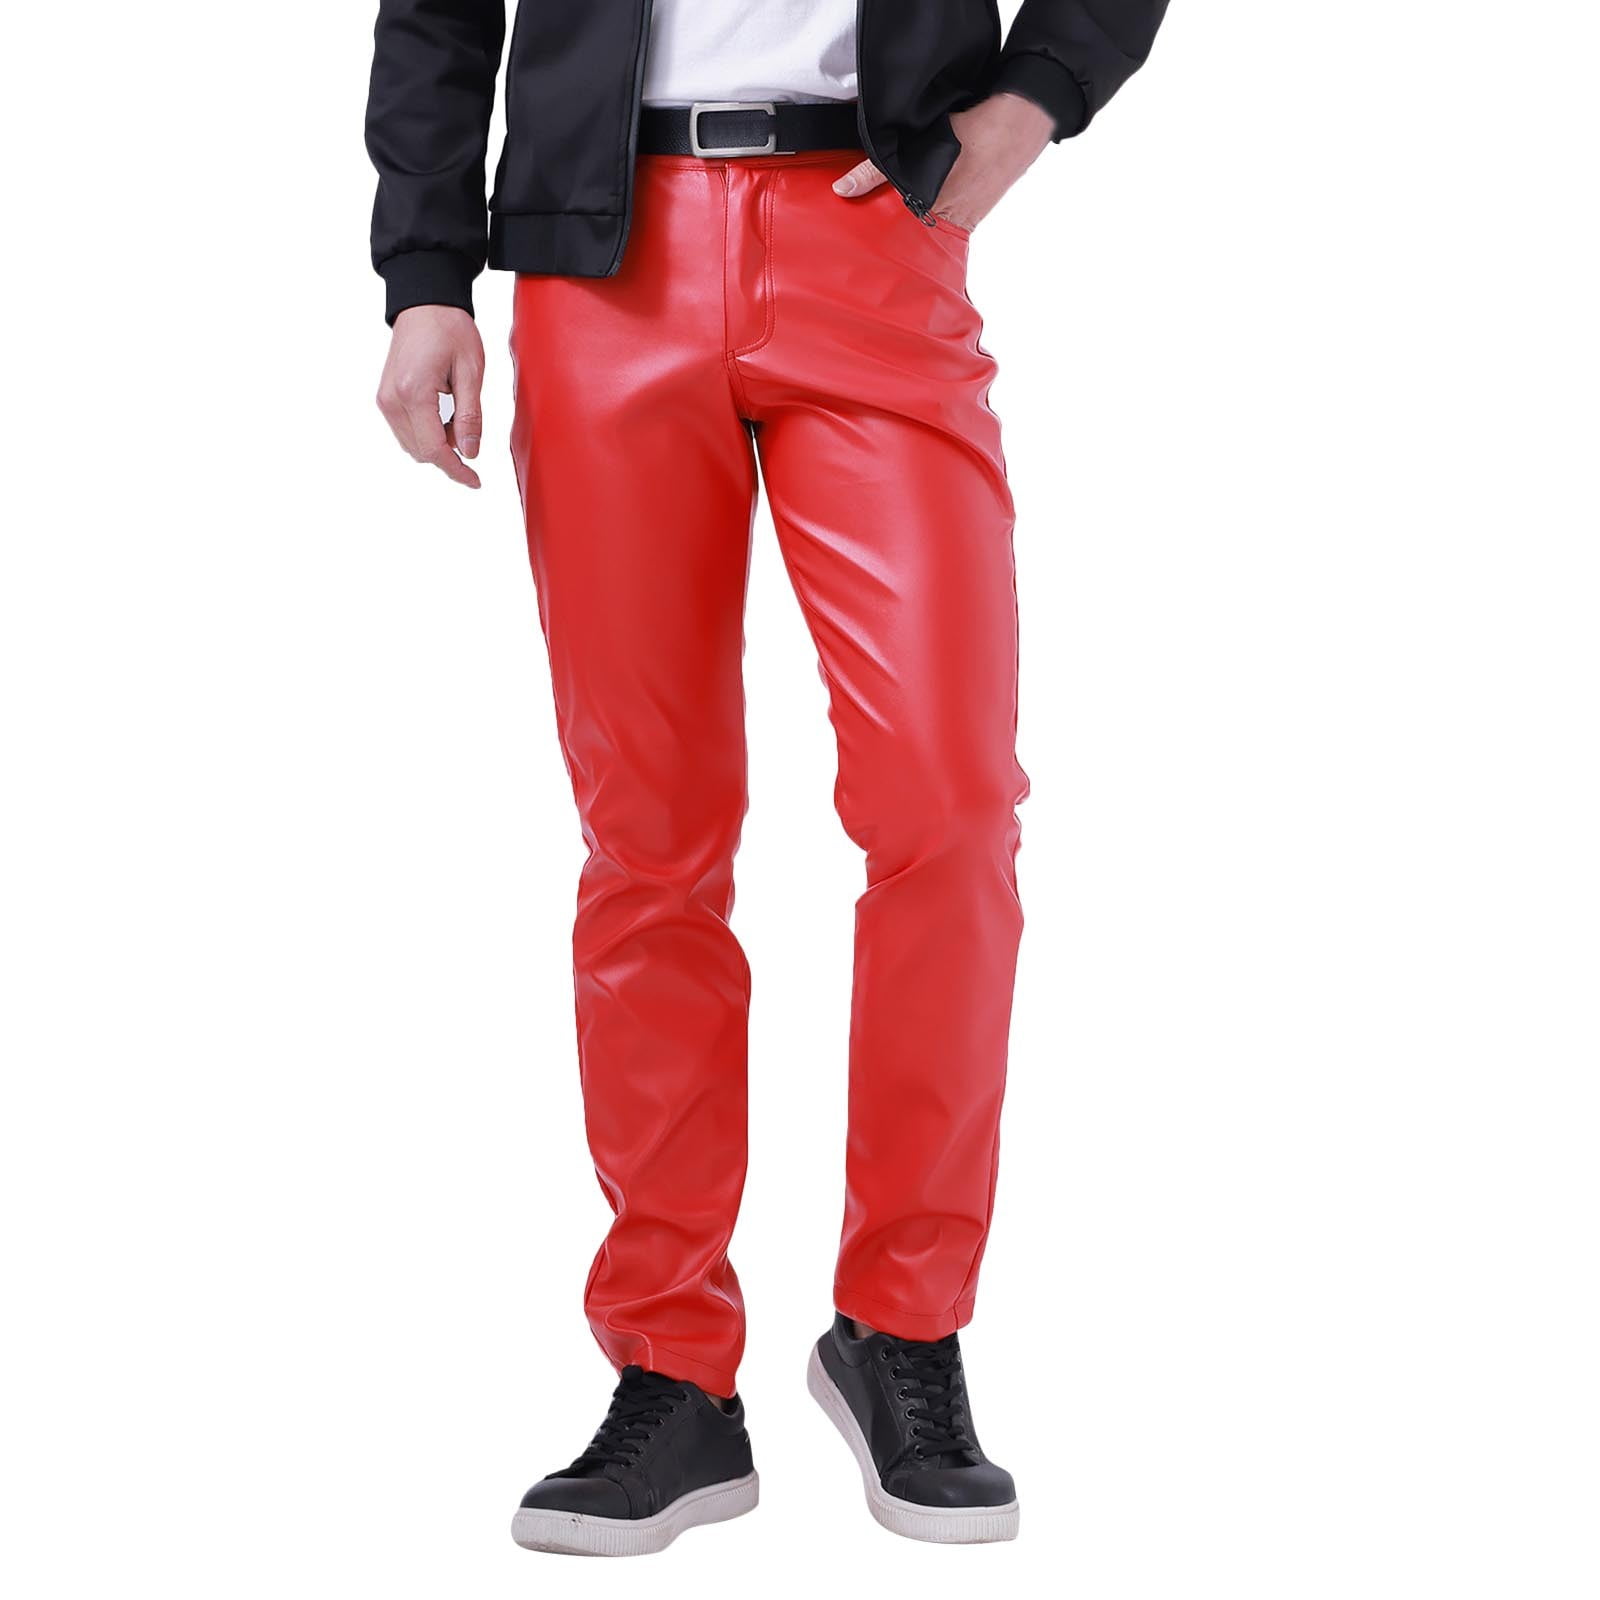 BJUTIR Casual Pants For Men Slim Fitting Leather Pants Leggings Color ...